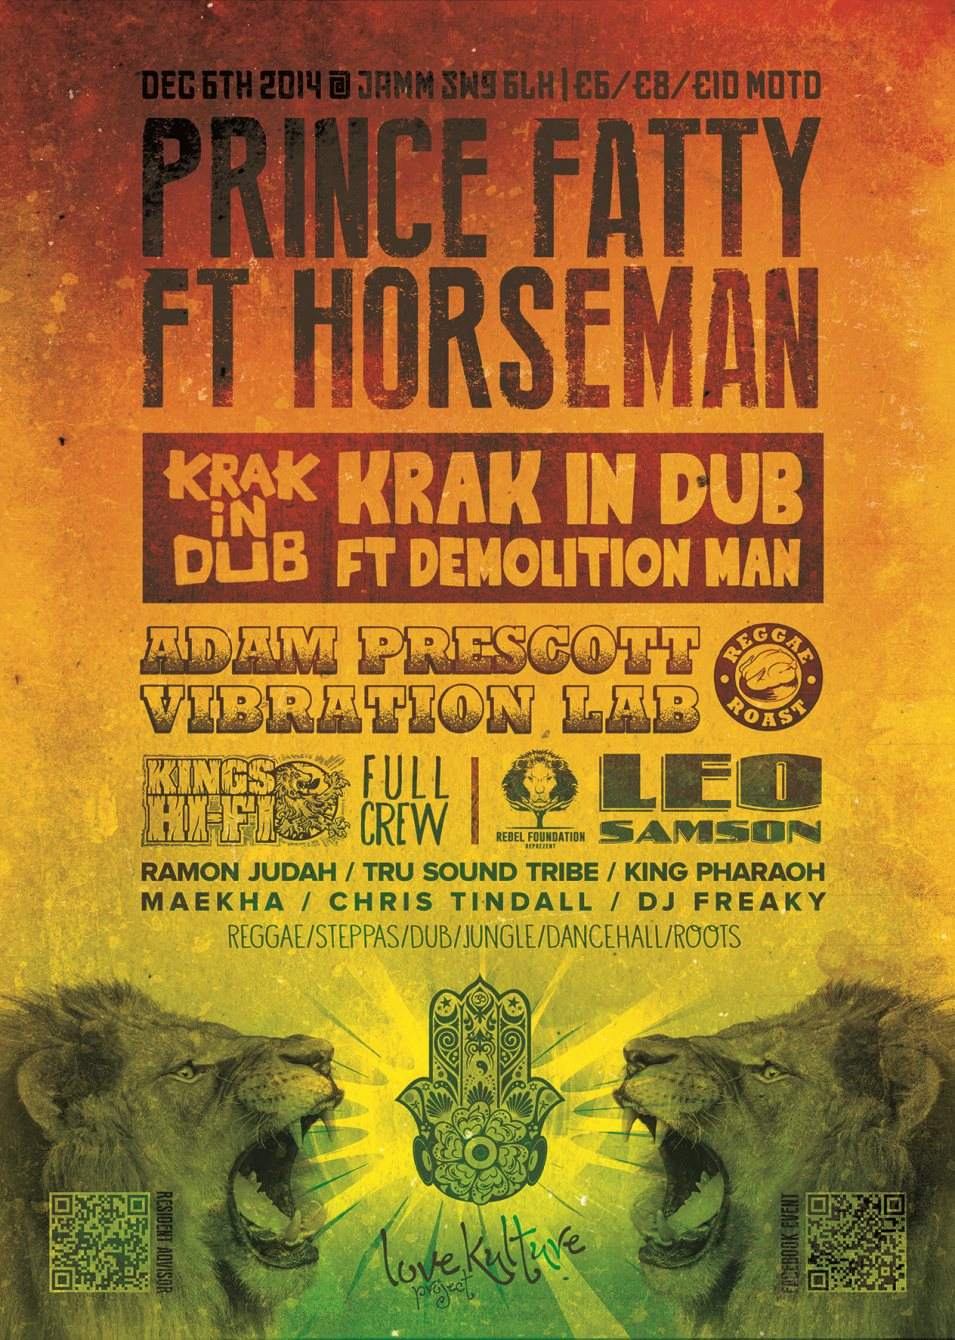 Love Kulture Project presents Prince Fatty ft Horseman, Krak in Dub + Many More - Página trasera